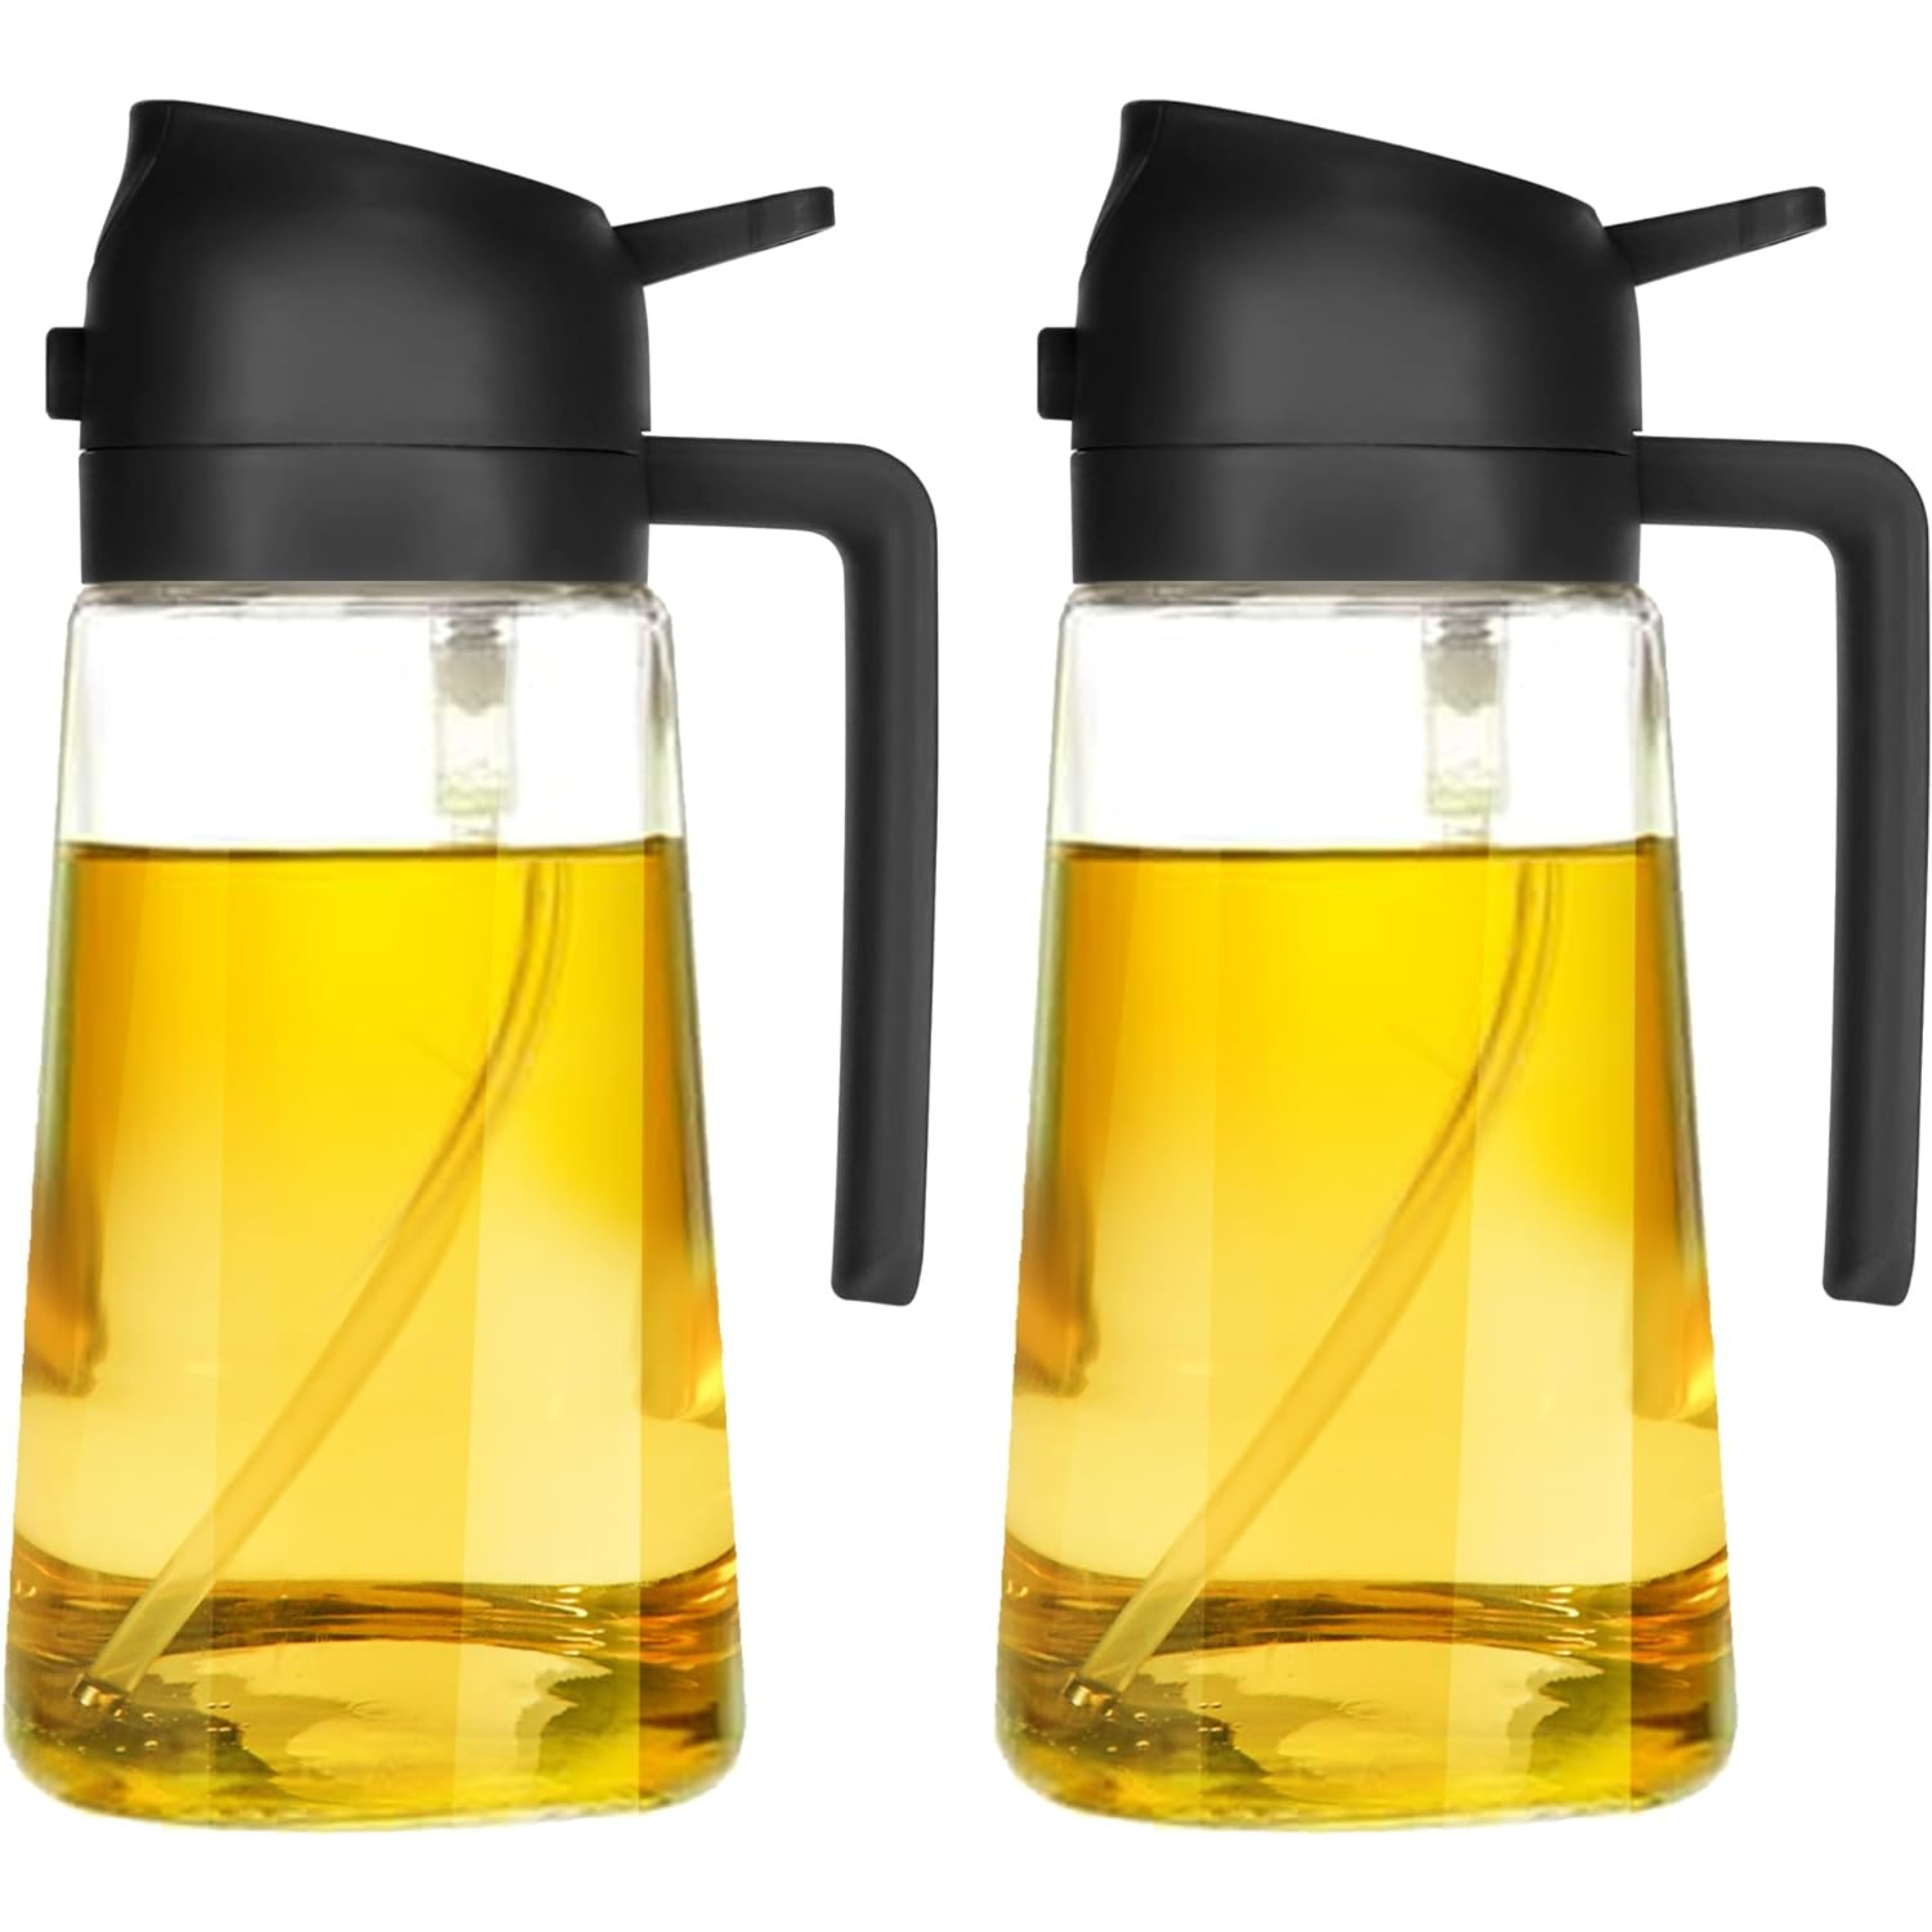 16oz Oil Dispenser Bottle for Kitchen - 2 in 1 Olive Oil Dispenser and Oil Sprayer - 470ml Olive Oil Bottle - Oil Sprayer for Cooking, Kitchen, Salad, Barbecue 2Pcs Black - Horizon Bliss